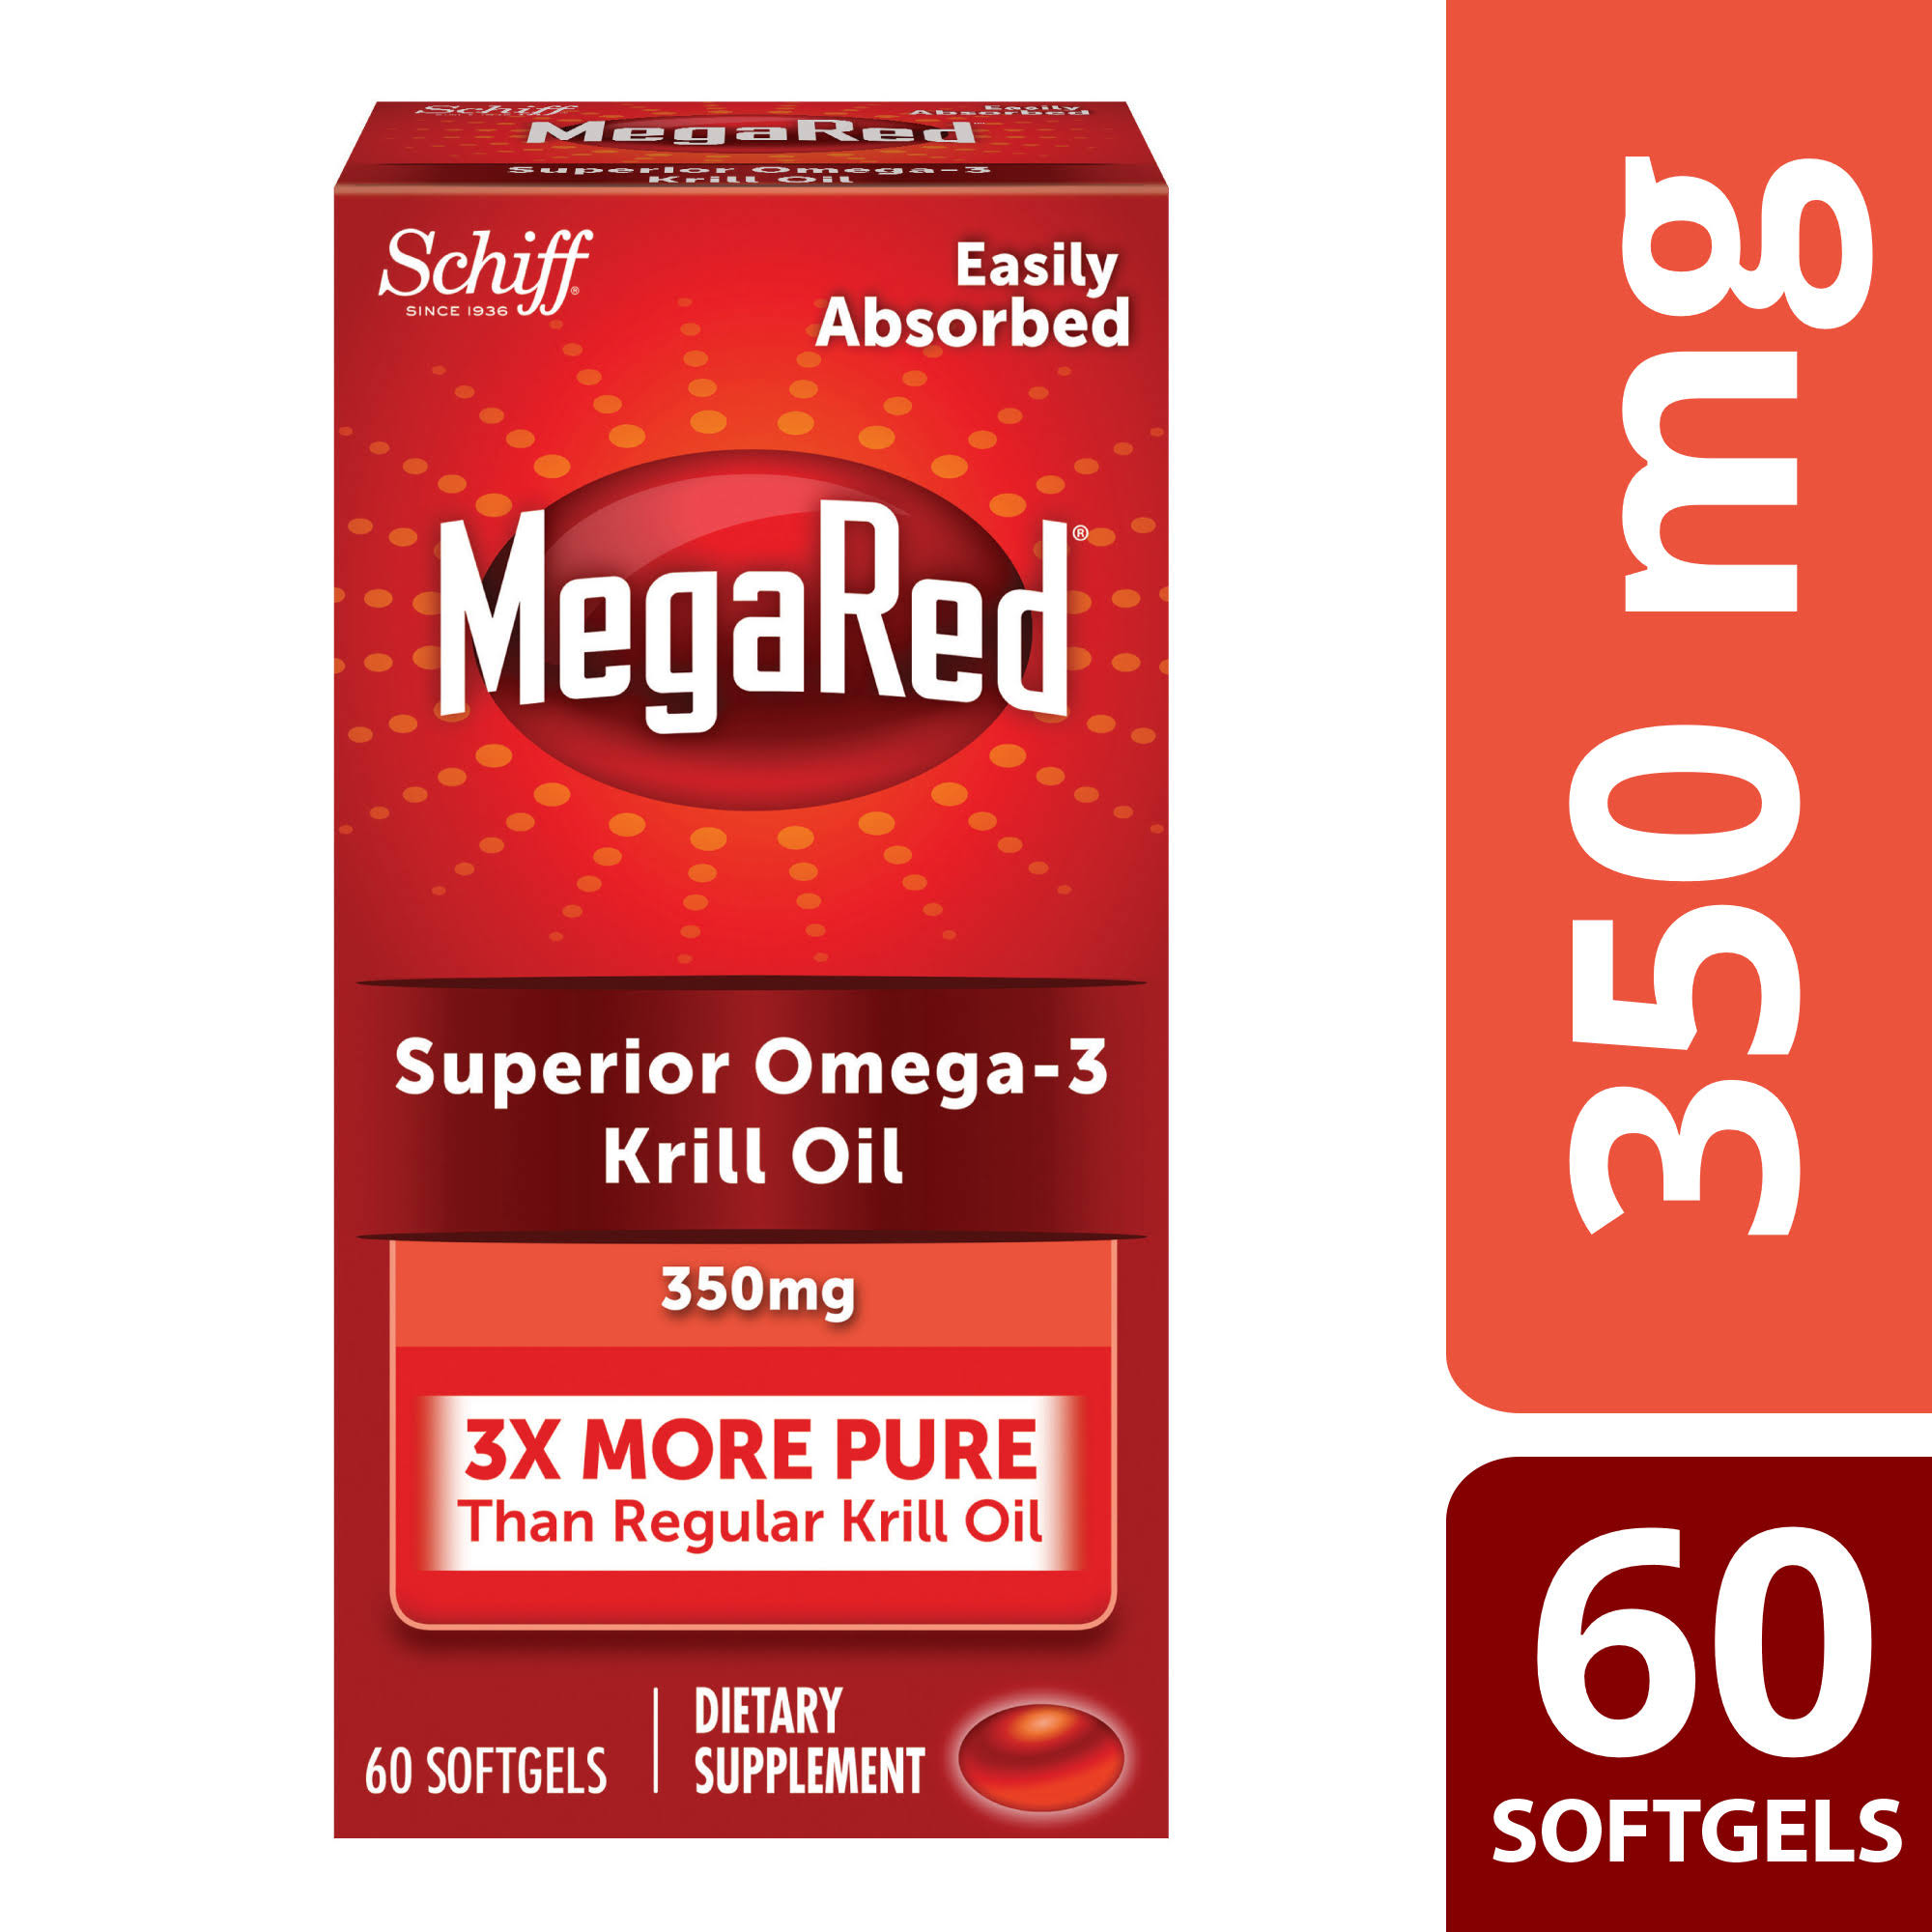 Schiff Megared Omega-3 Krill Oil - 65 softgels